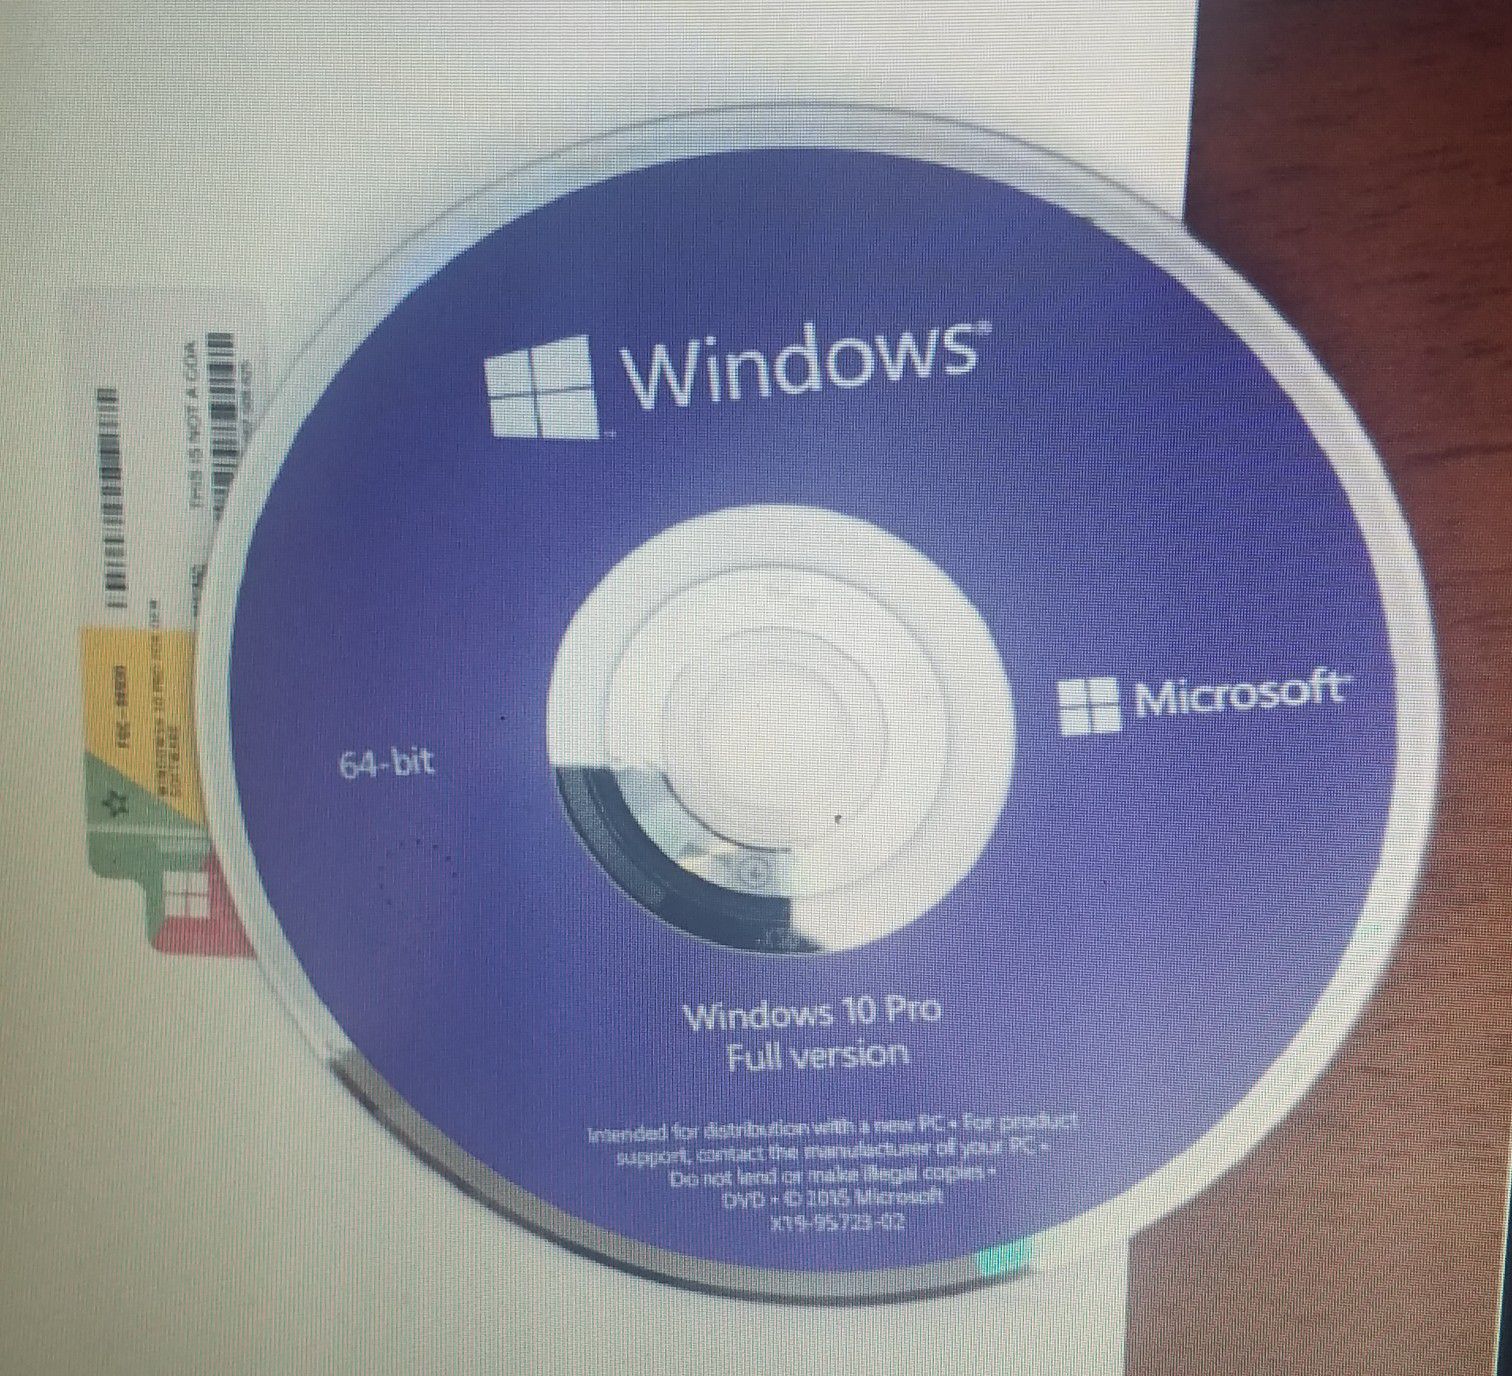 Microsoft Genuine Windows 10 Pro 64bit DVD and Key Code New/Sealed Original Package